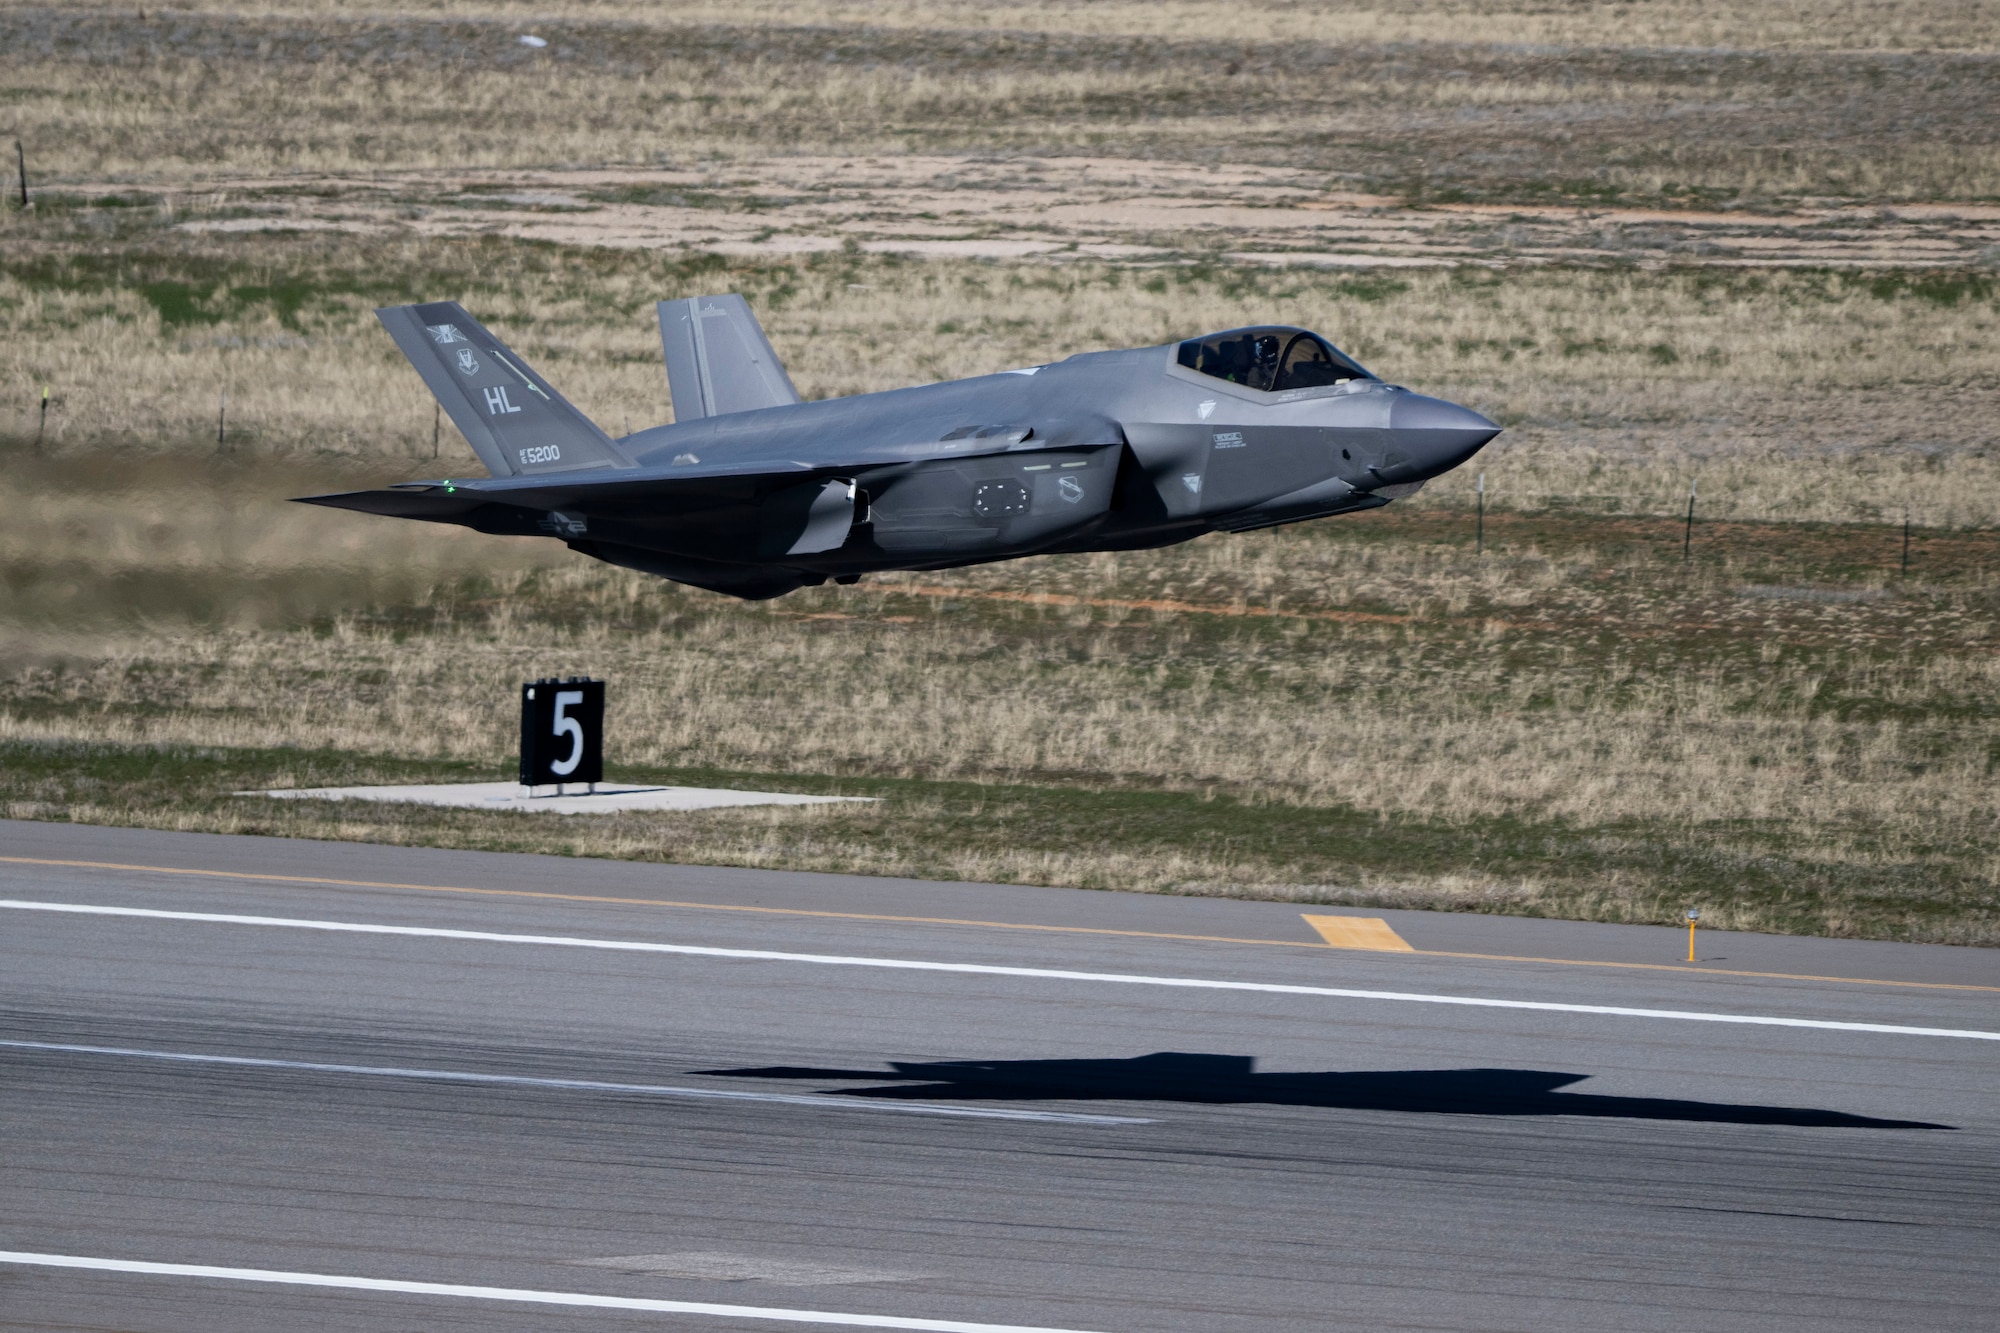 A military airplane flies a few feet off the runway